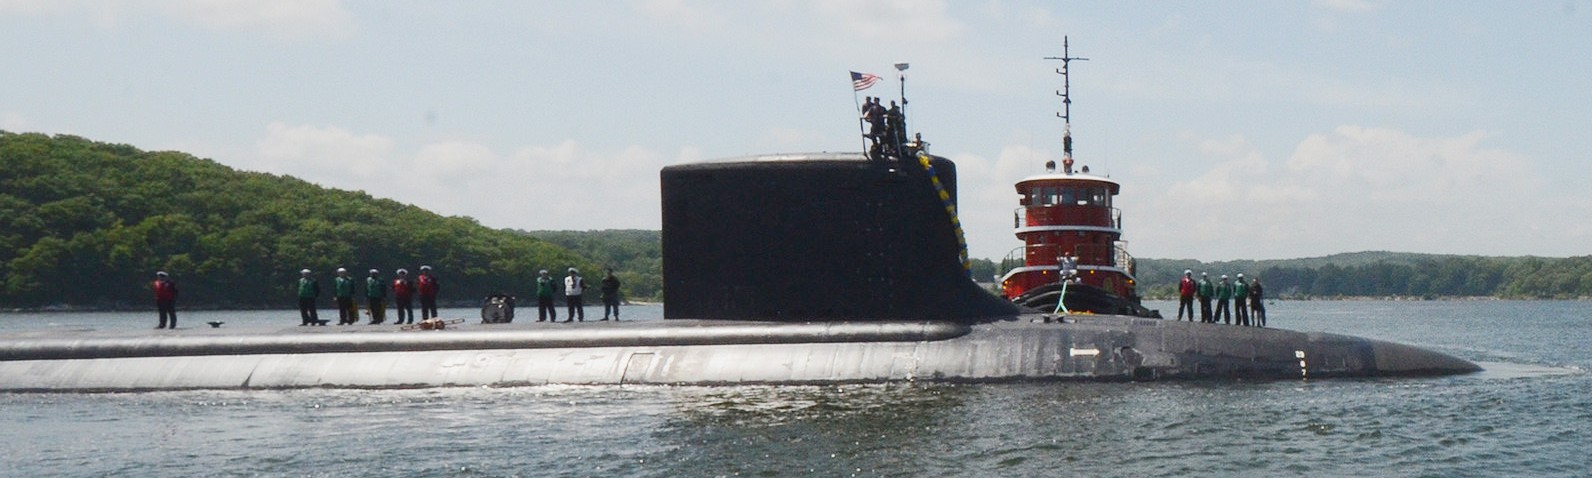 ssn-774 uss virginia attack submarine navy 2014 05 submarine base new london groton connecticut